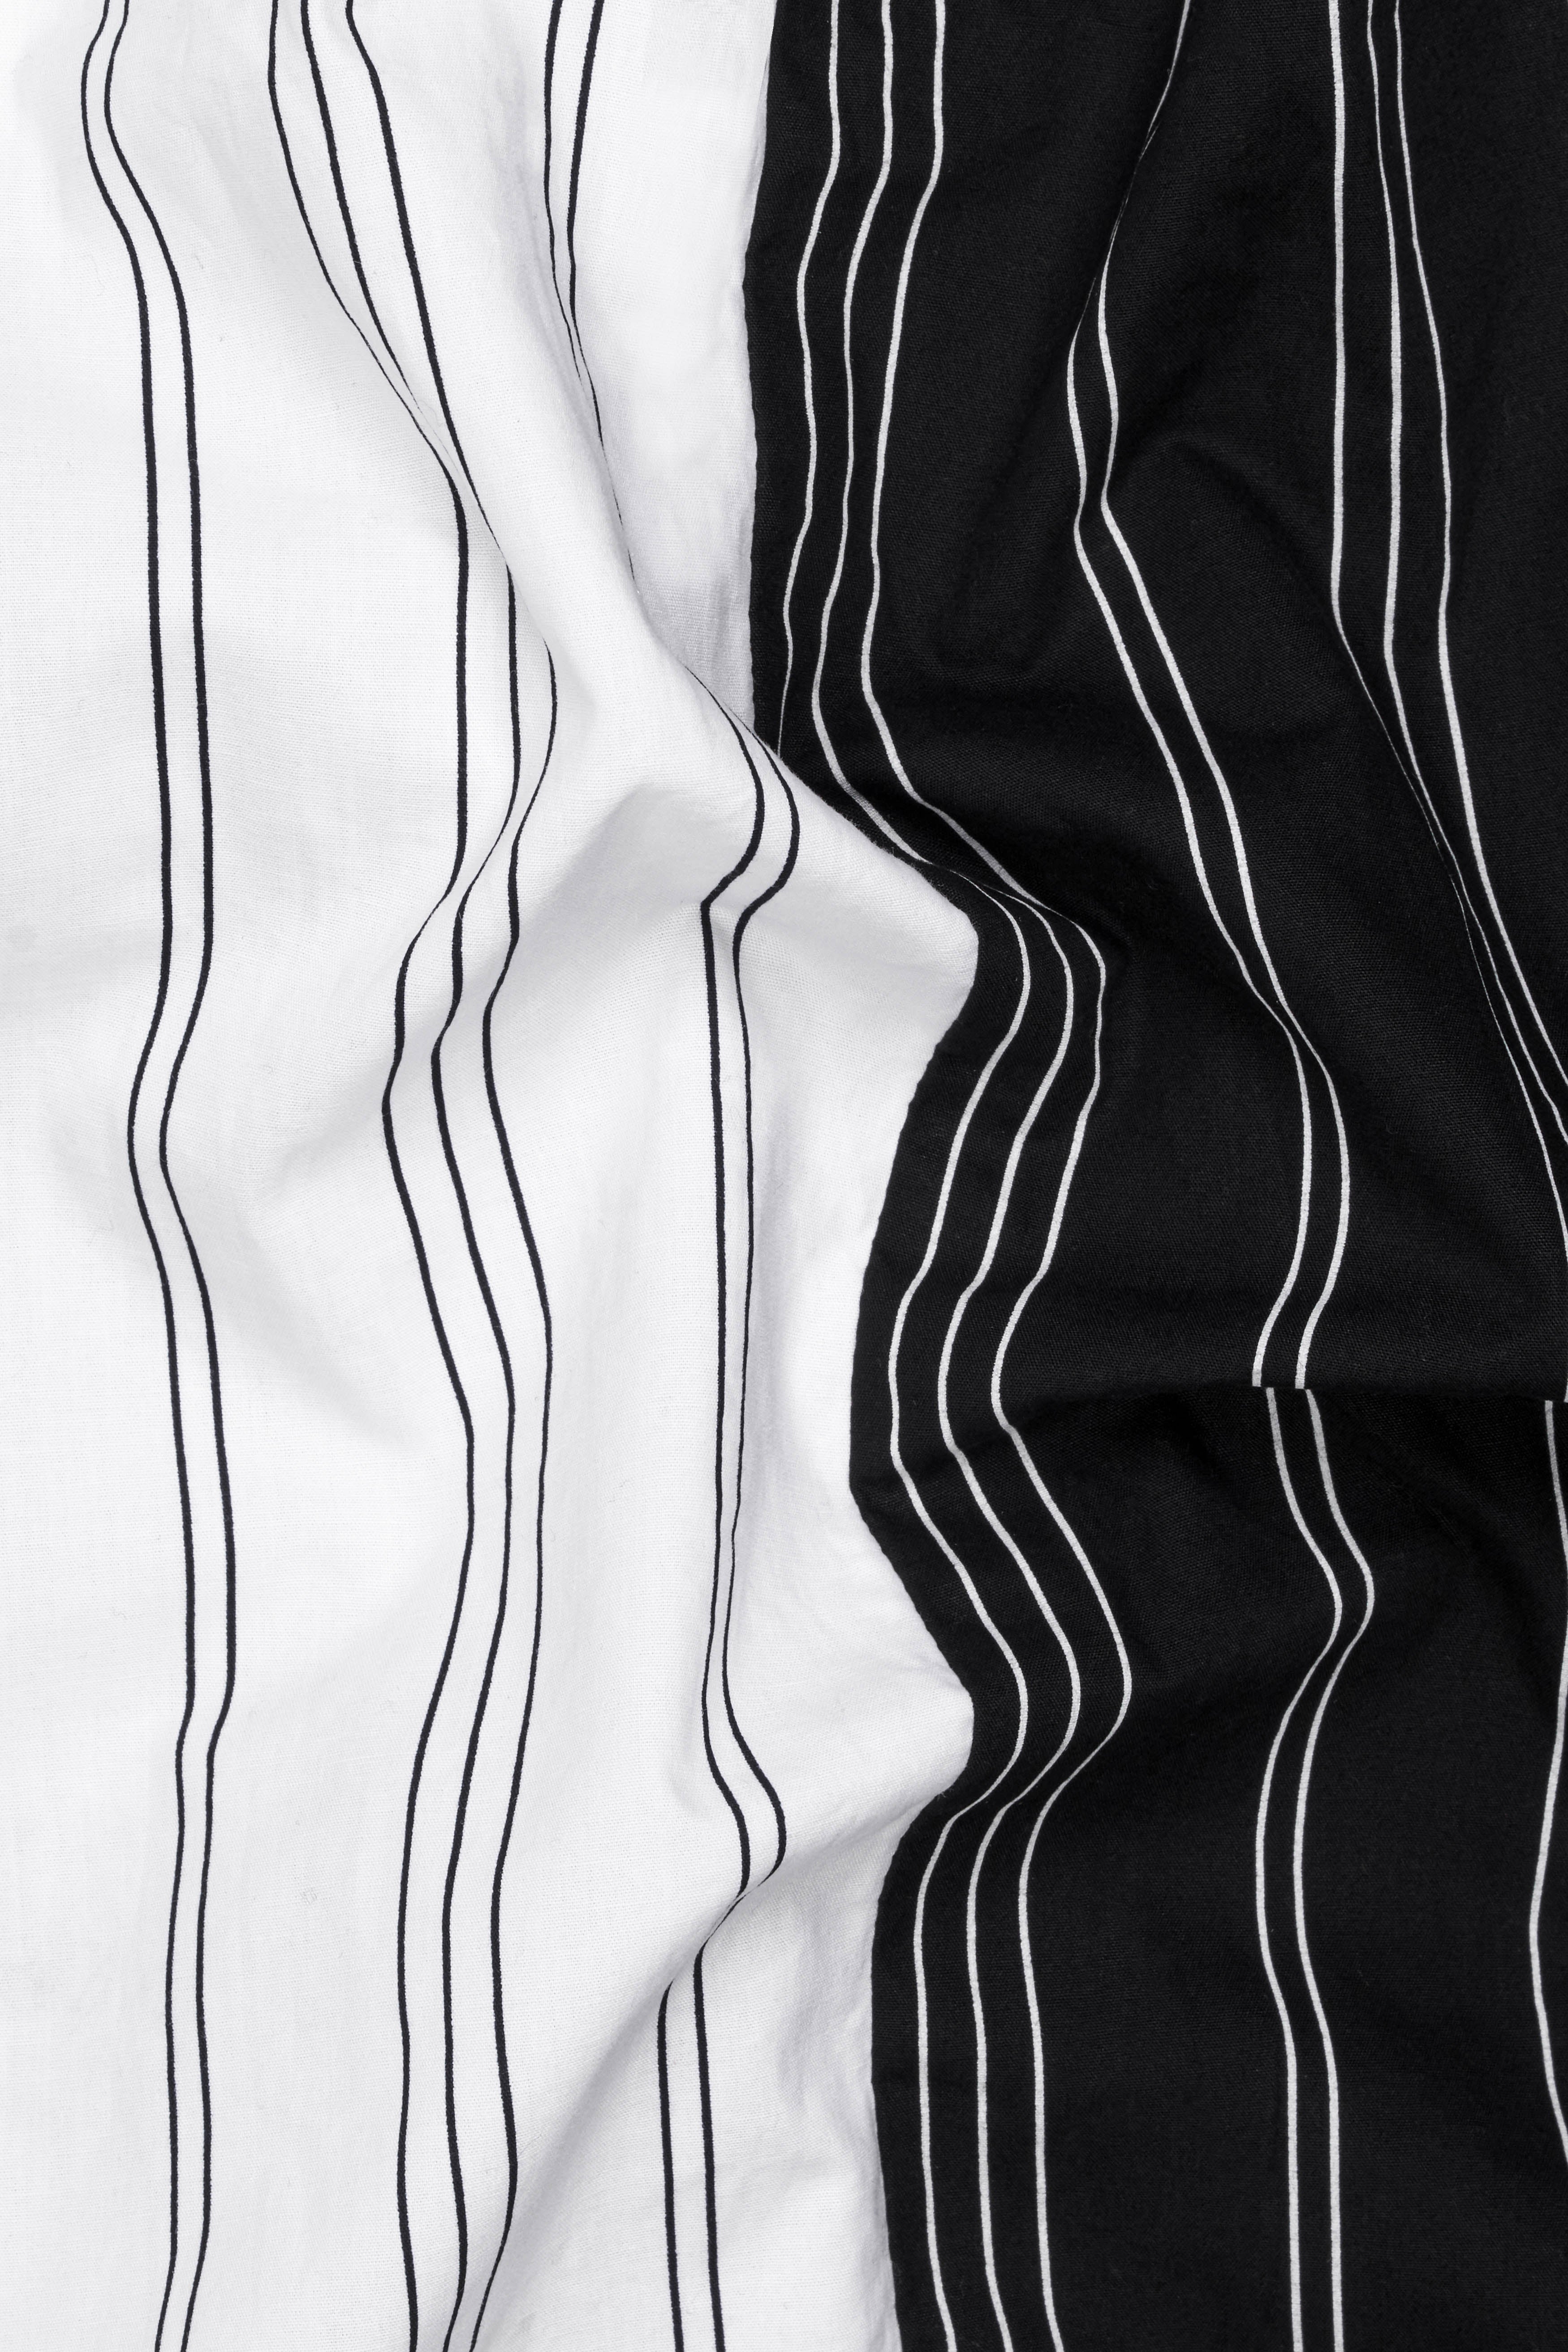 Bright White and Black Striped Twill Premium Cotton Designer Shirt